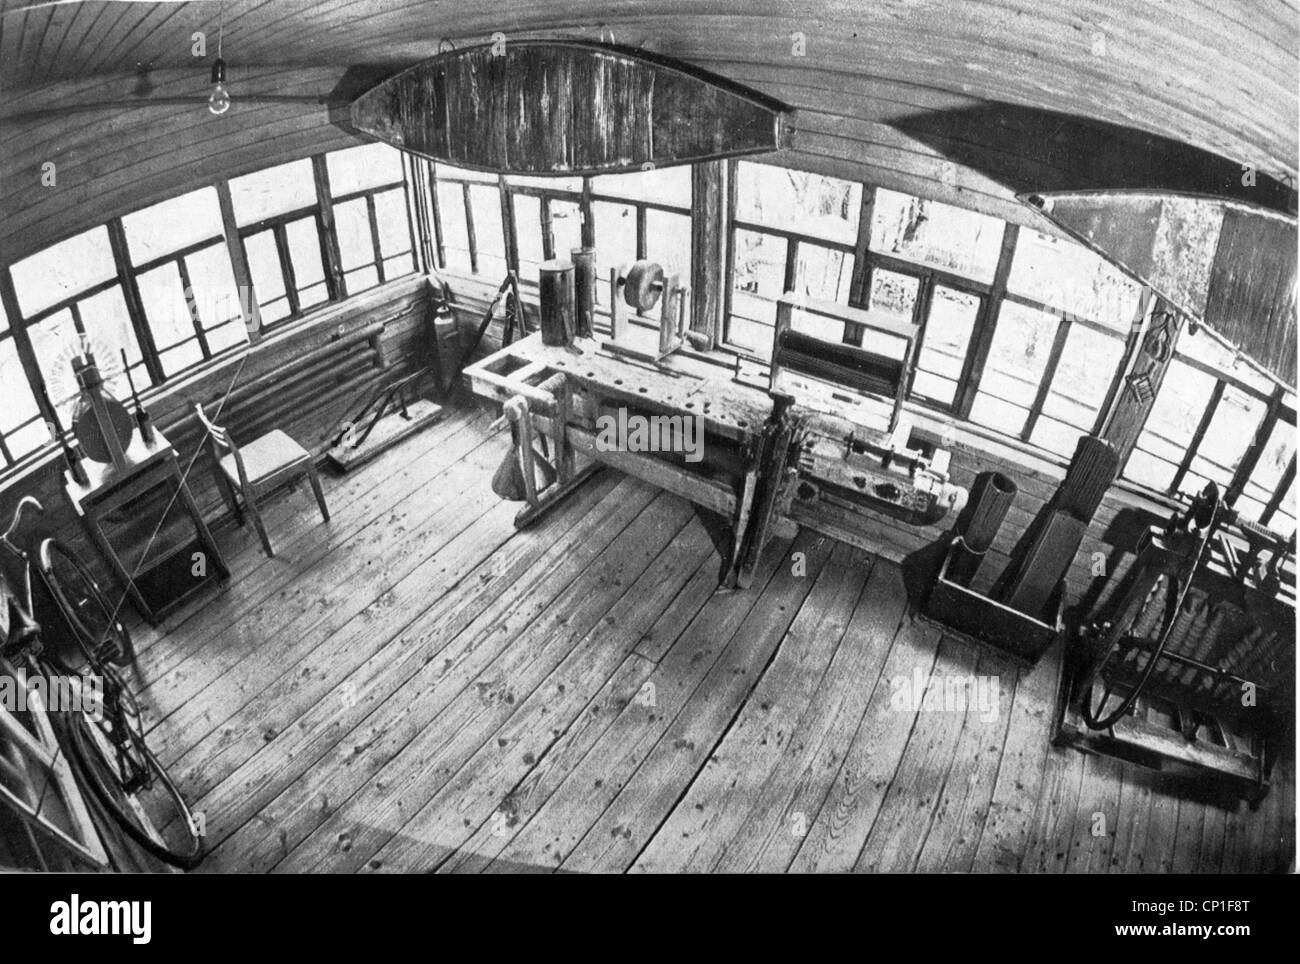 Tsiolkovskii, Konstantin Eduardovich, 17.9.1857 - 19.9.1935, physicien russe, mathématicien, son atelier, Banque D'Images